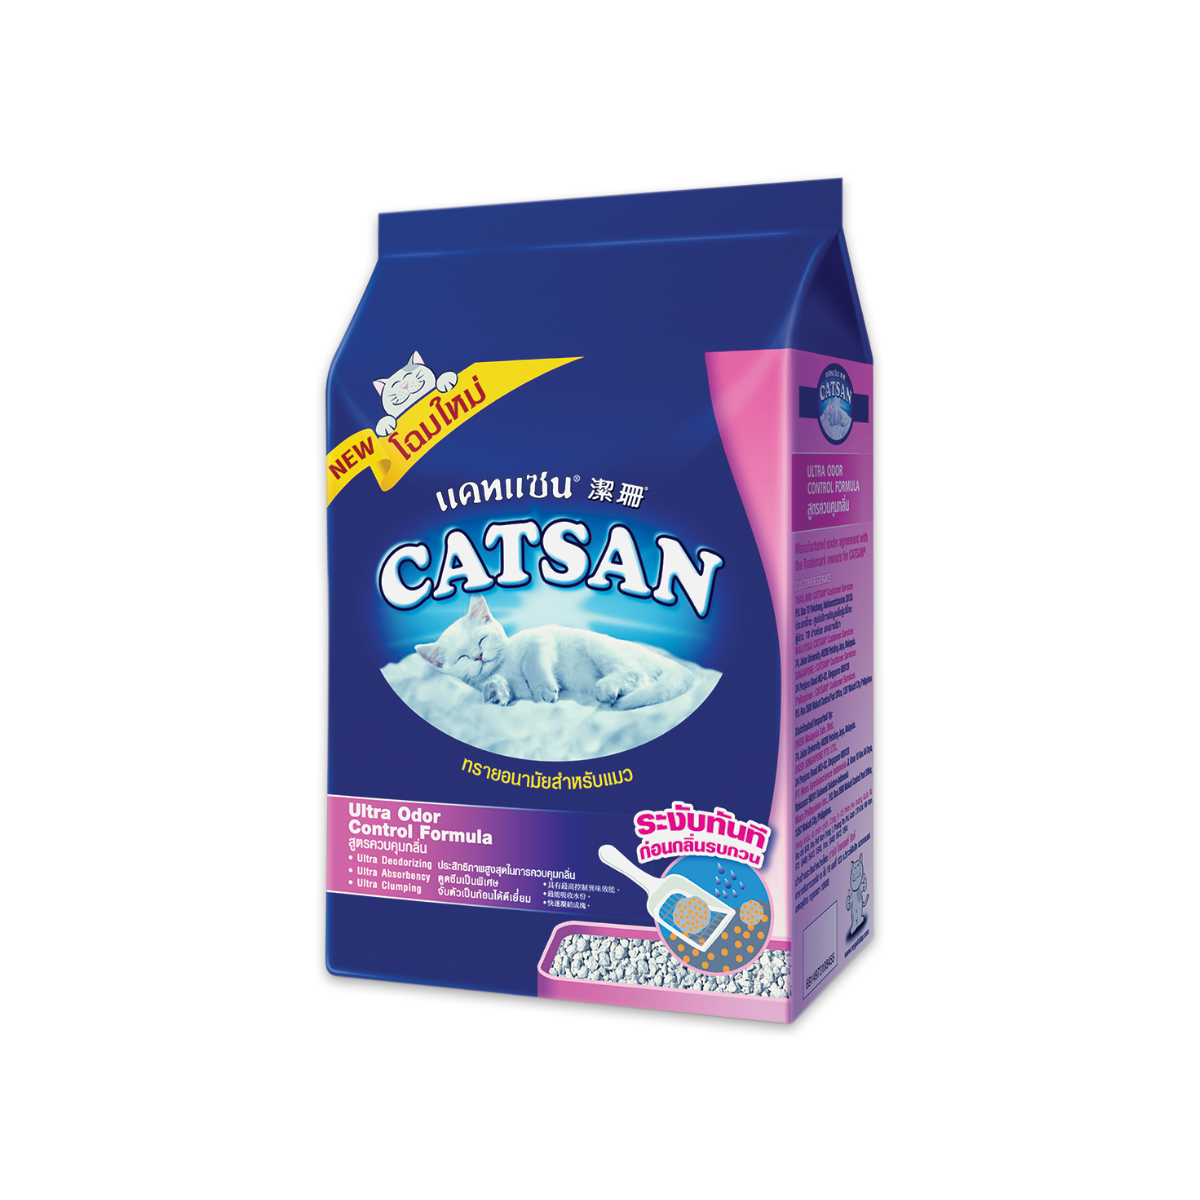 CATSAN Ultra Odor Control Formula แคทแซน ทรายแมวสูตรควบคุมกลิ่น